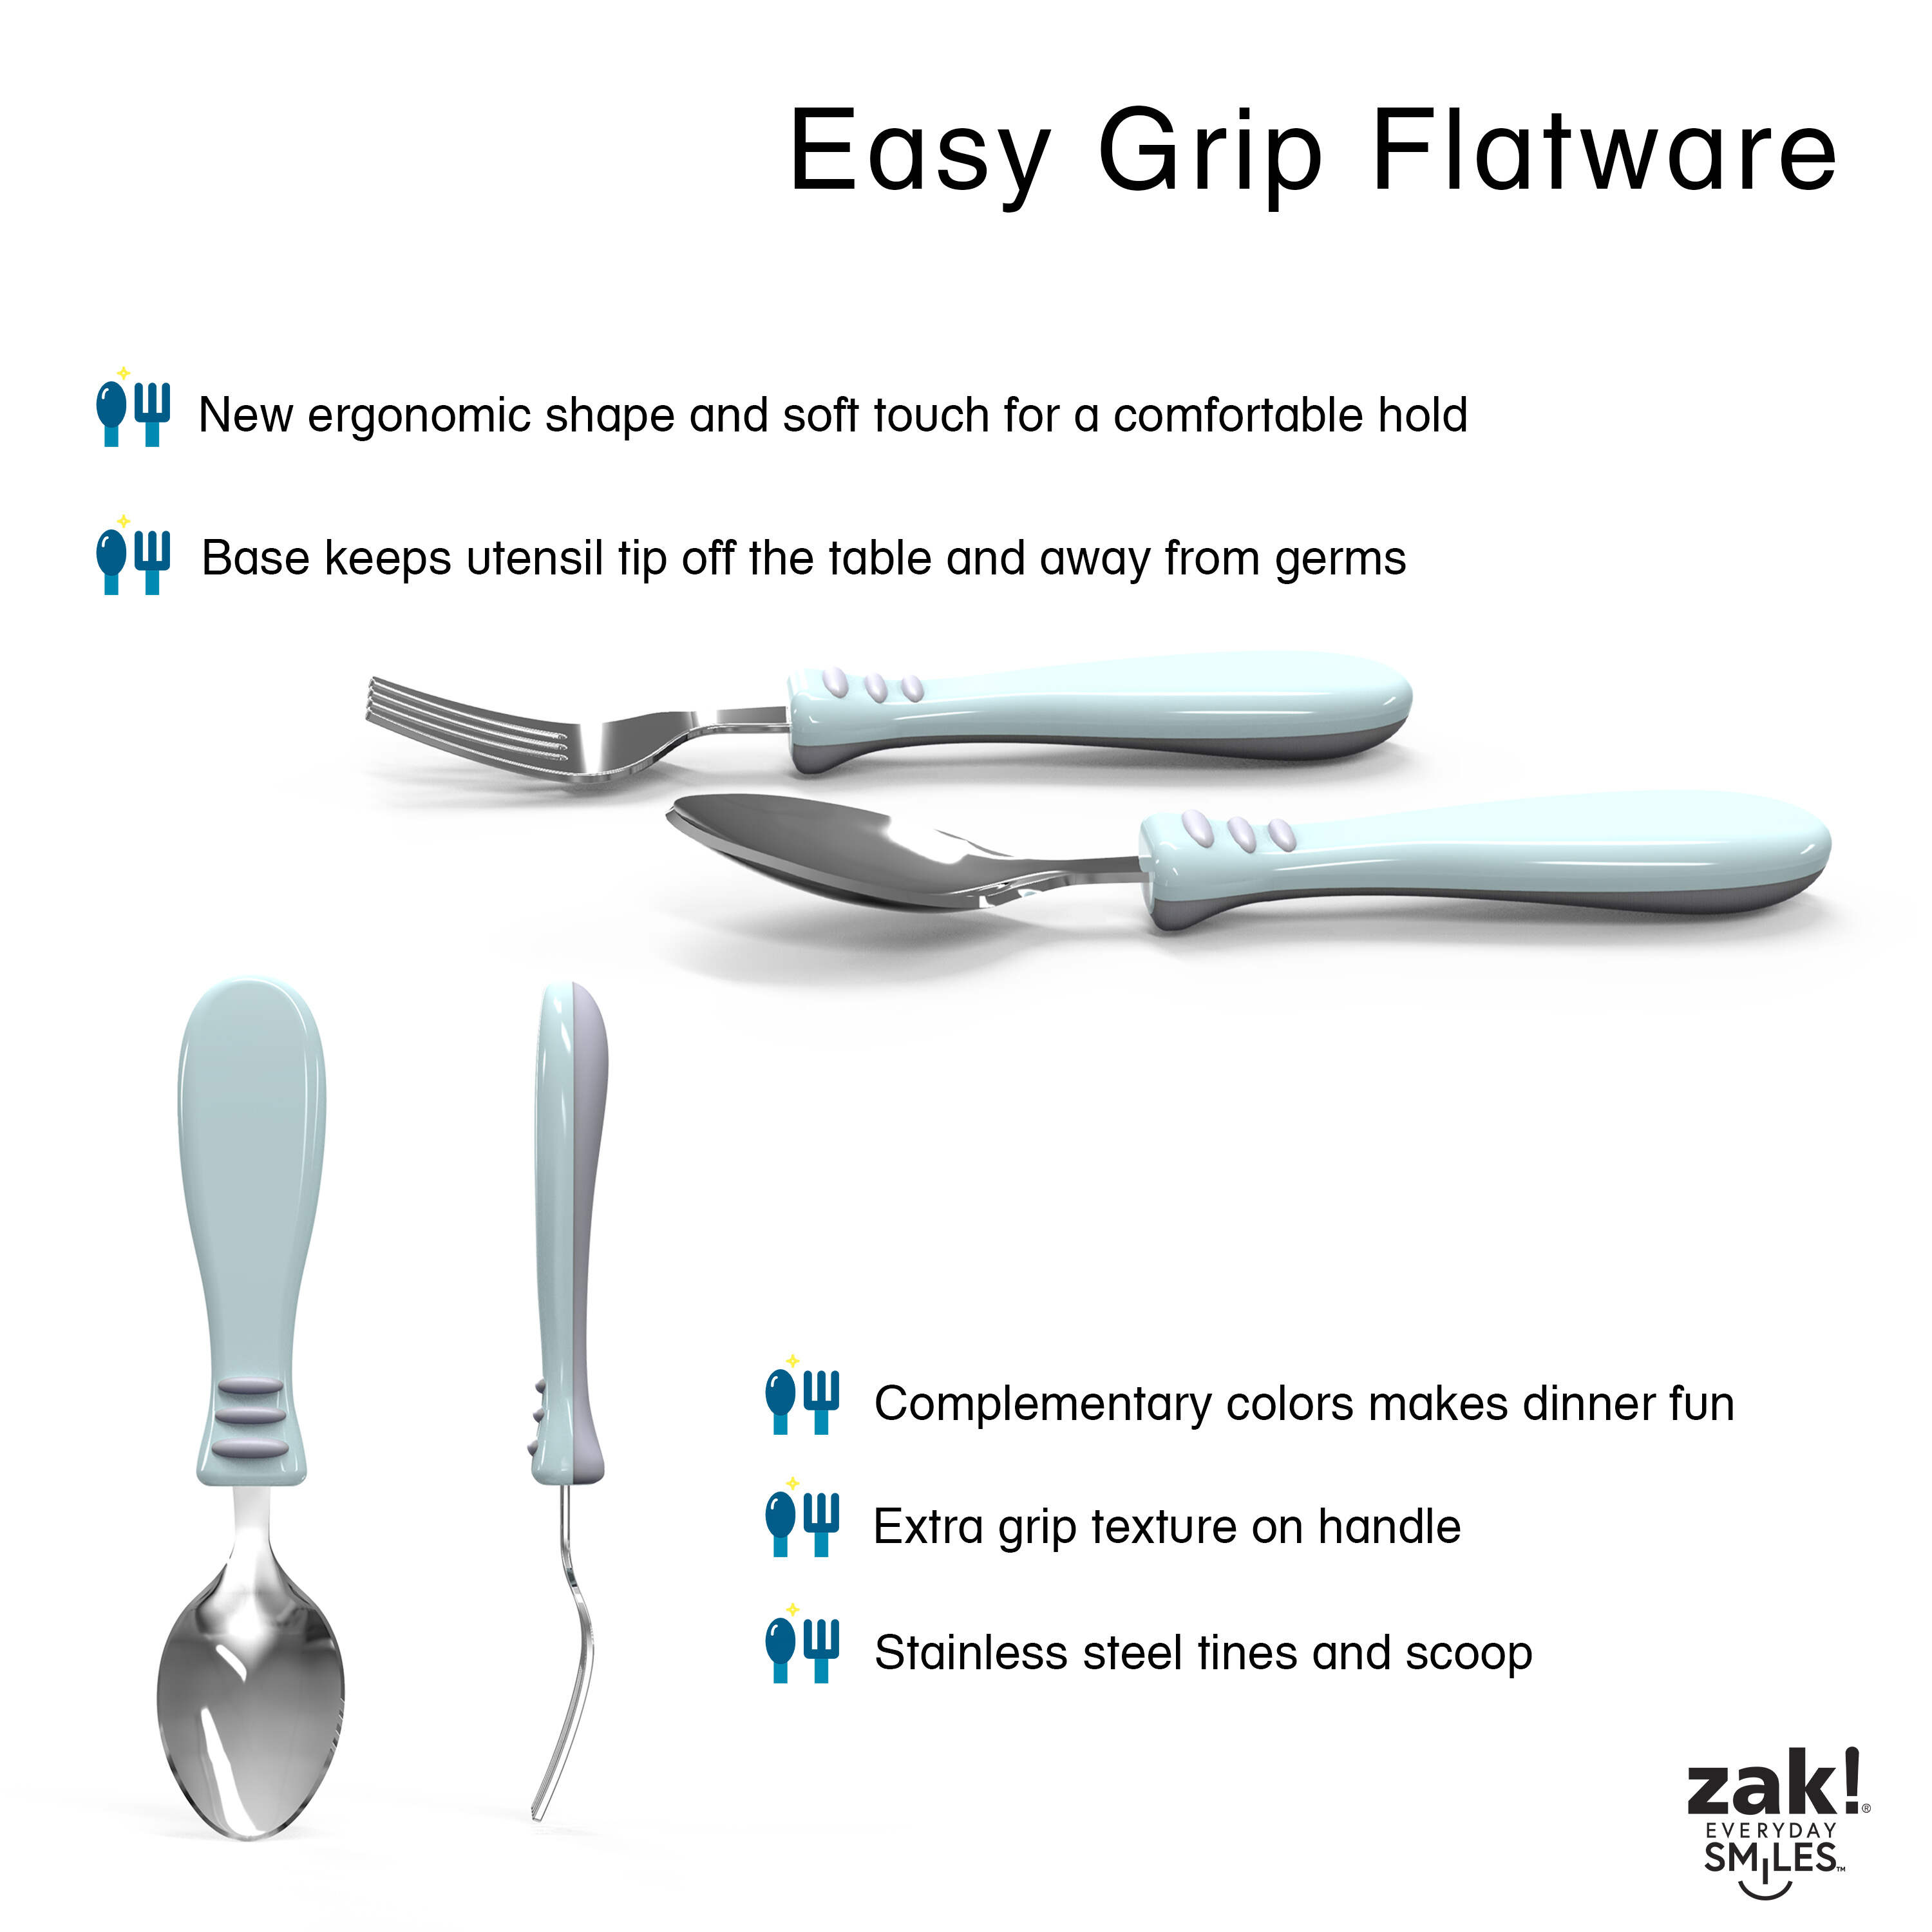 Disney Frozen Elsa Flatware Set Easy Grip Spoon and Fork BPA Free by Zak 3+ 